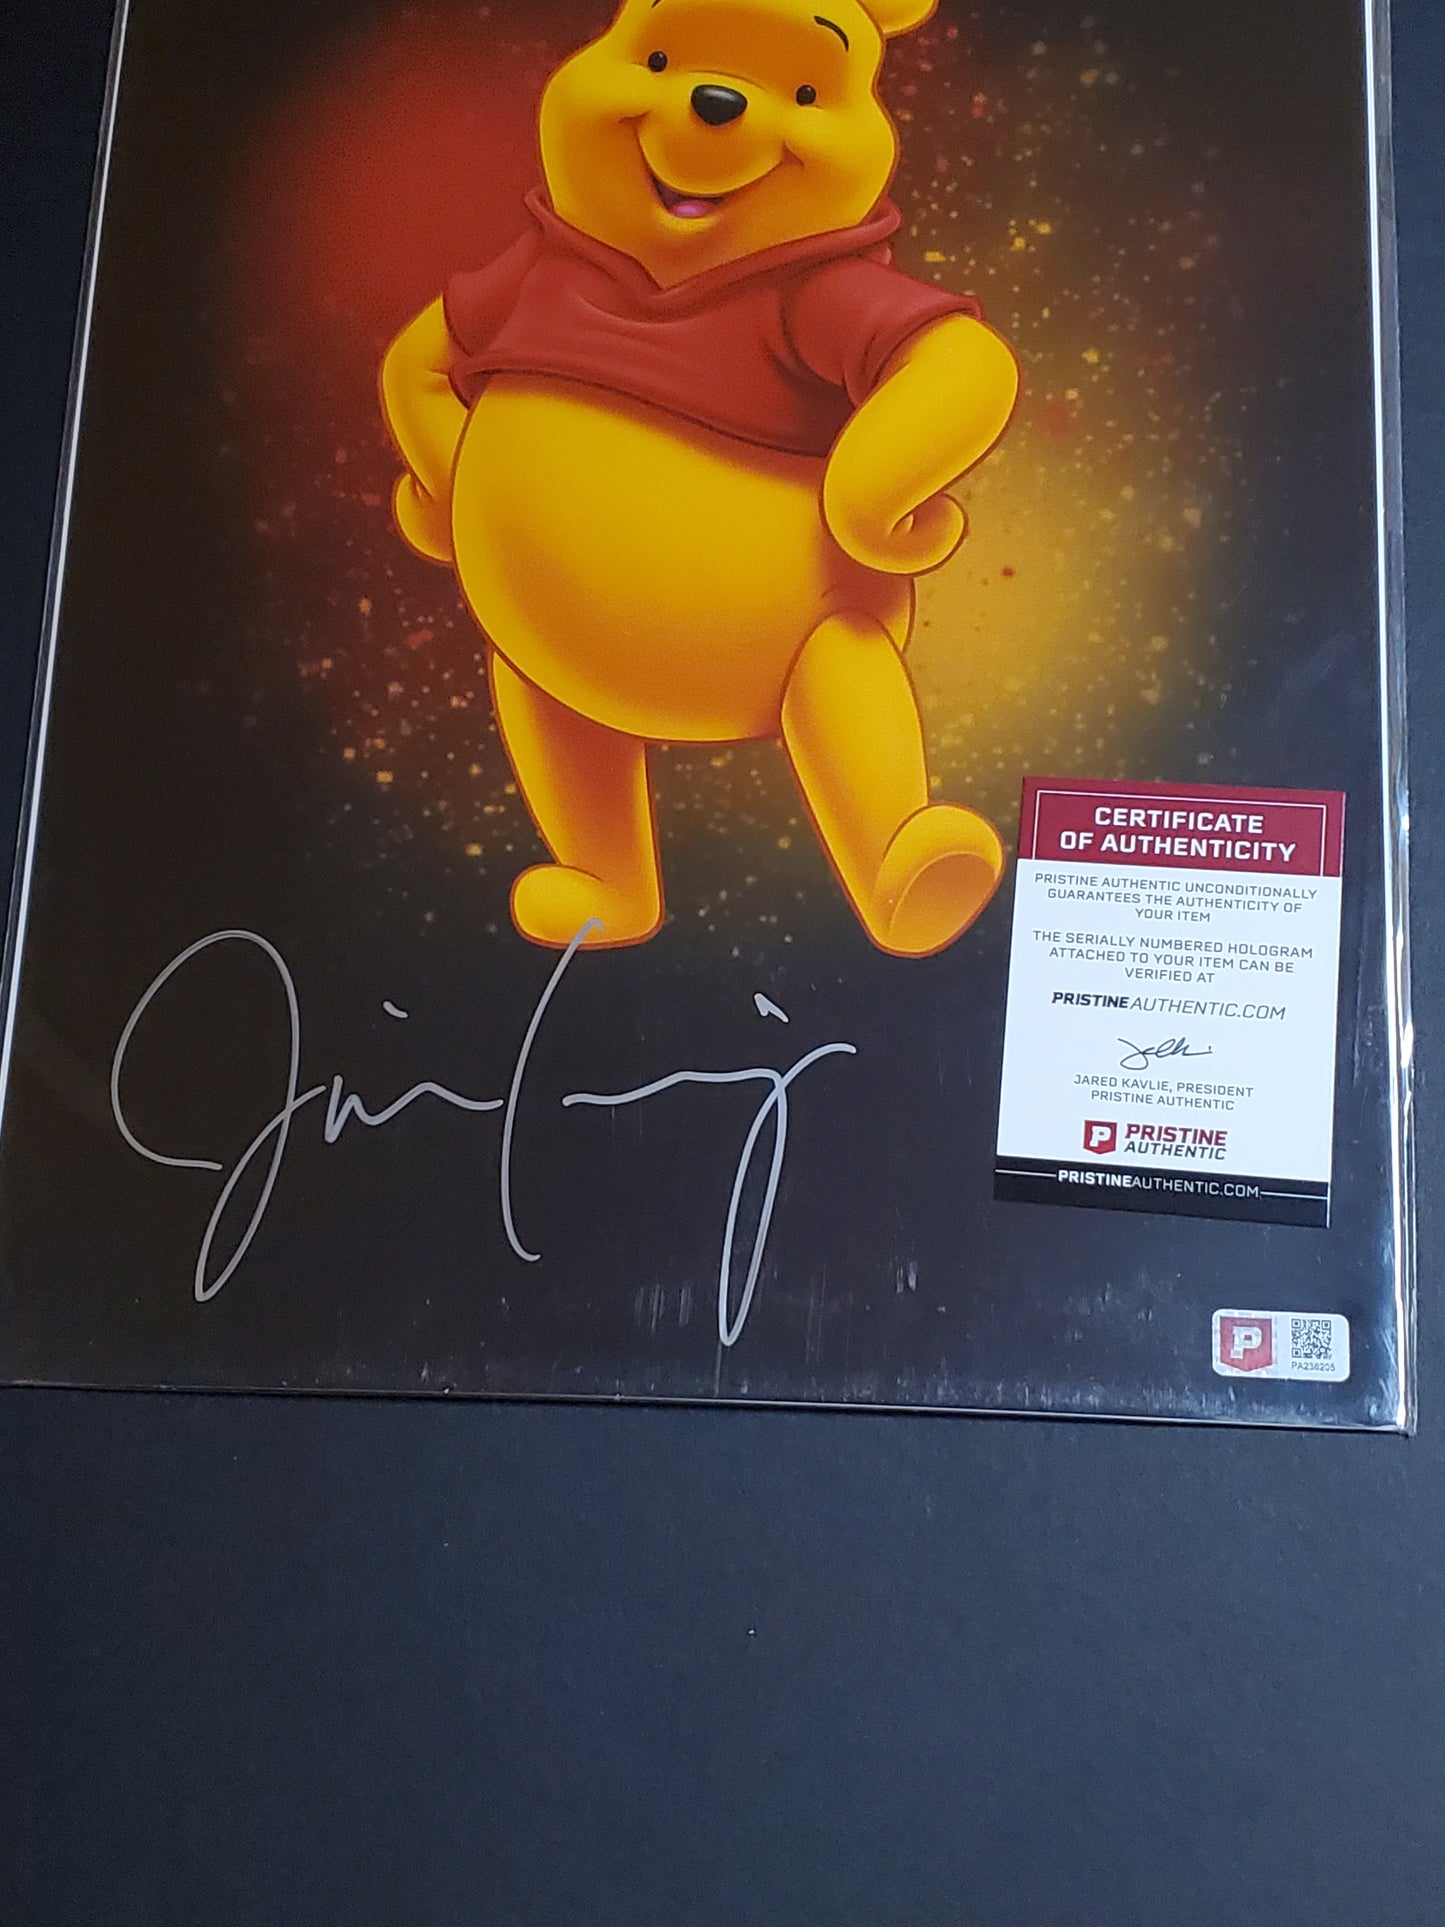 Jim Cummings Signed "Winnie the Pooh" 11x14 Photo (PA COA)